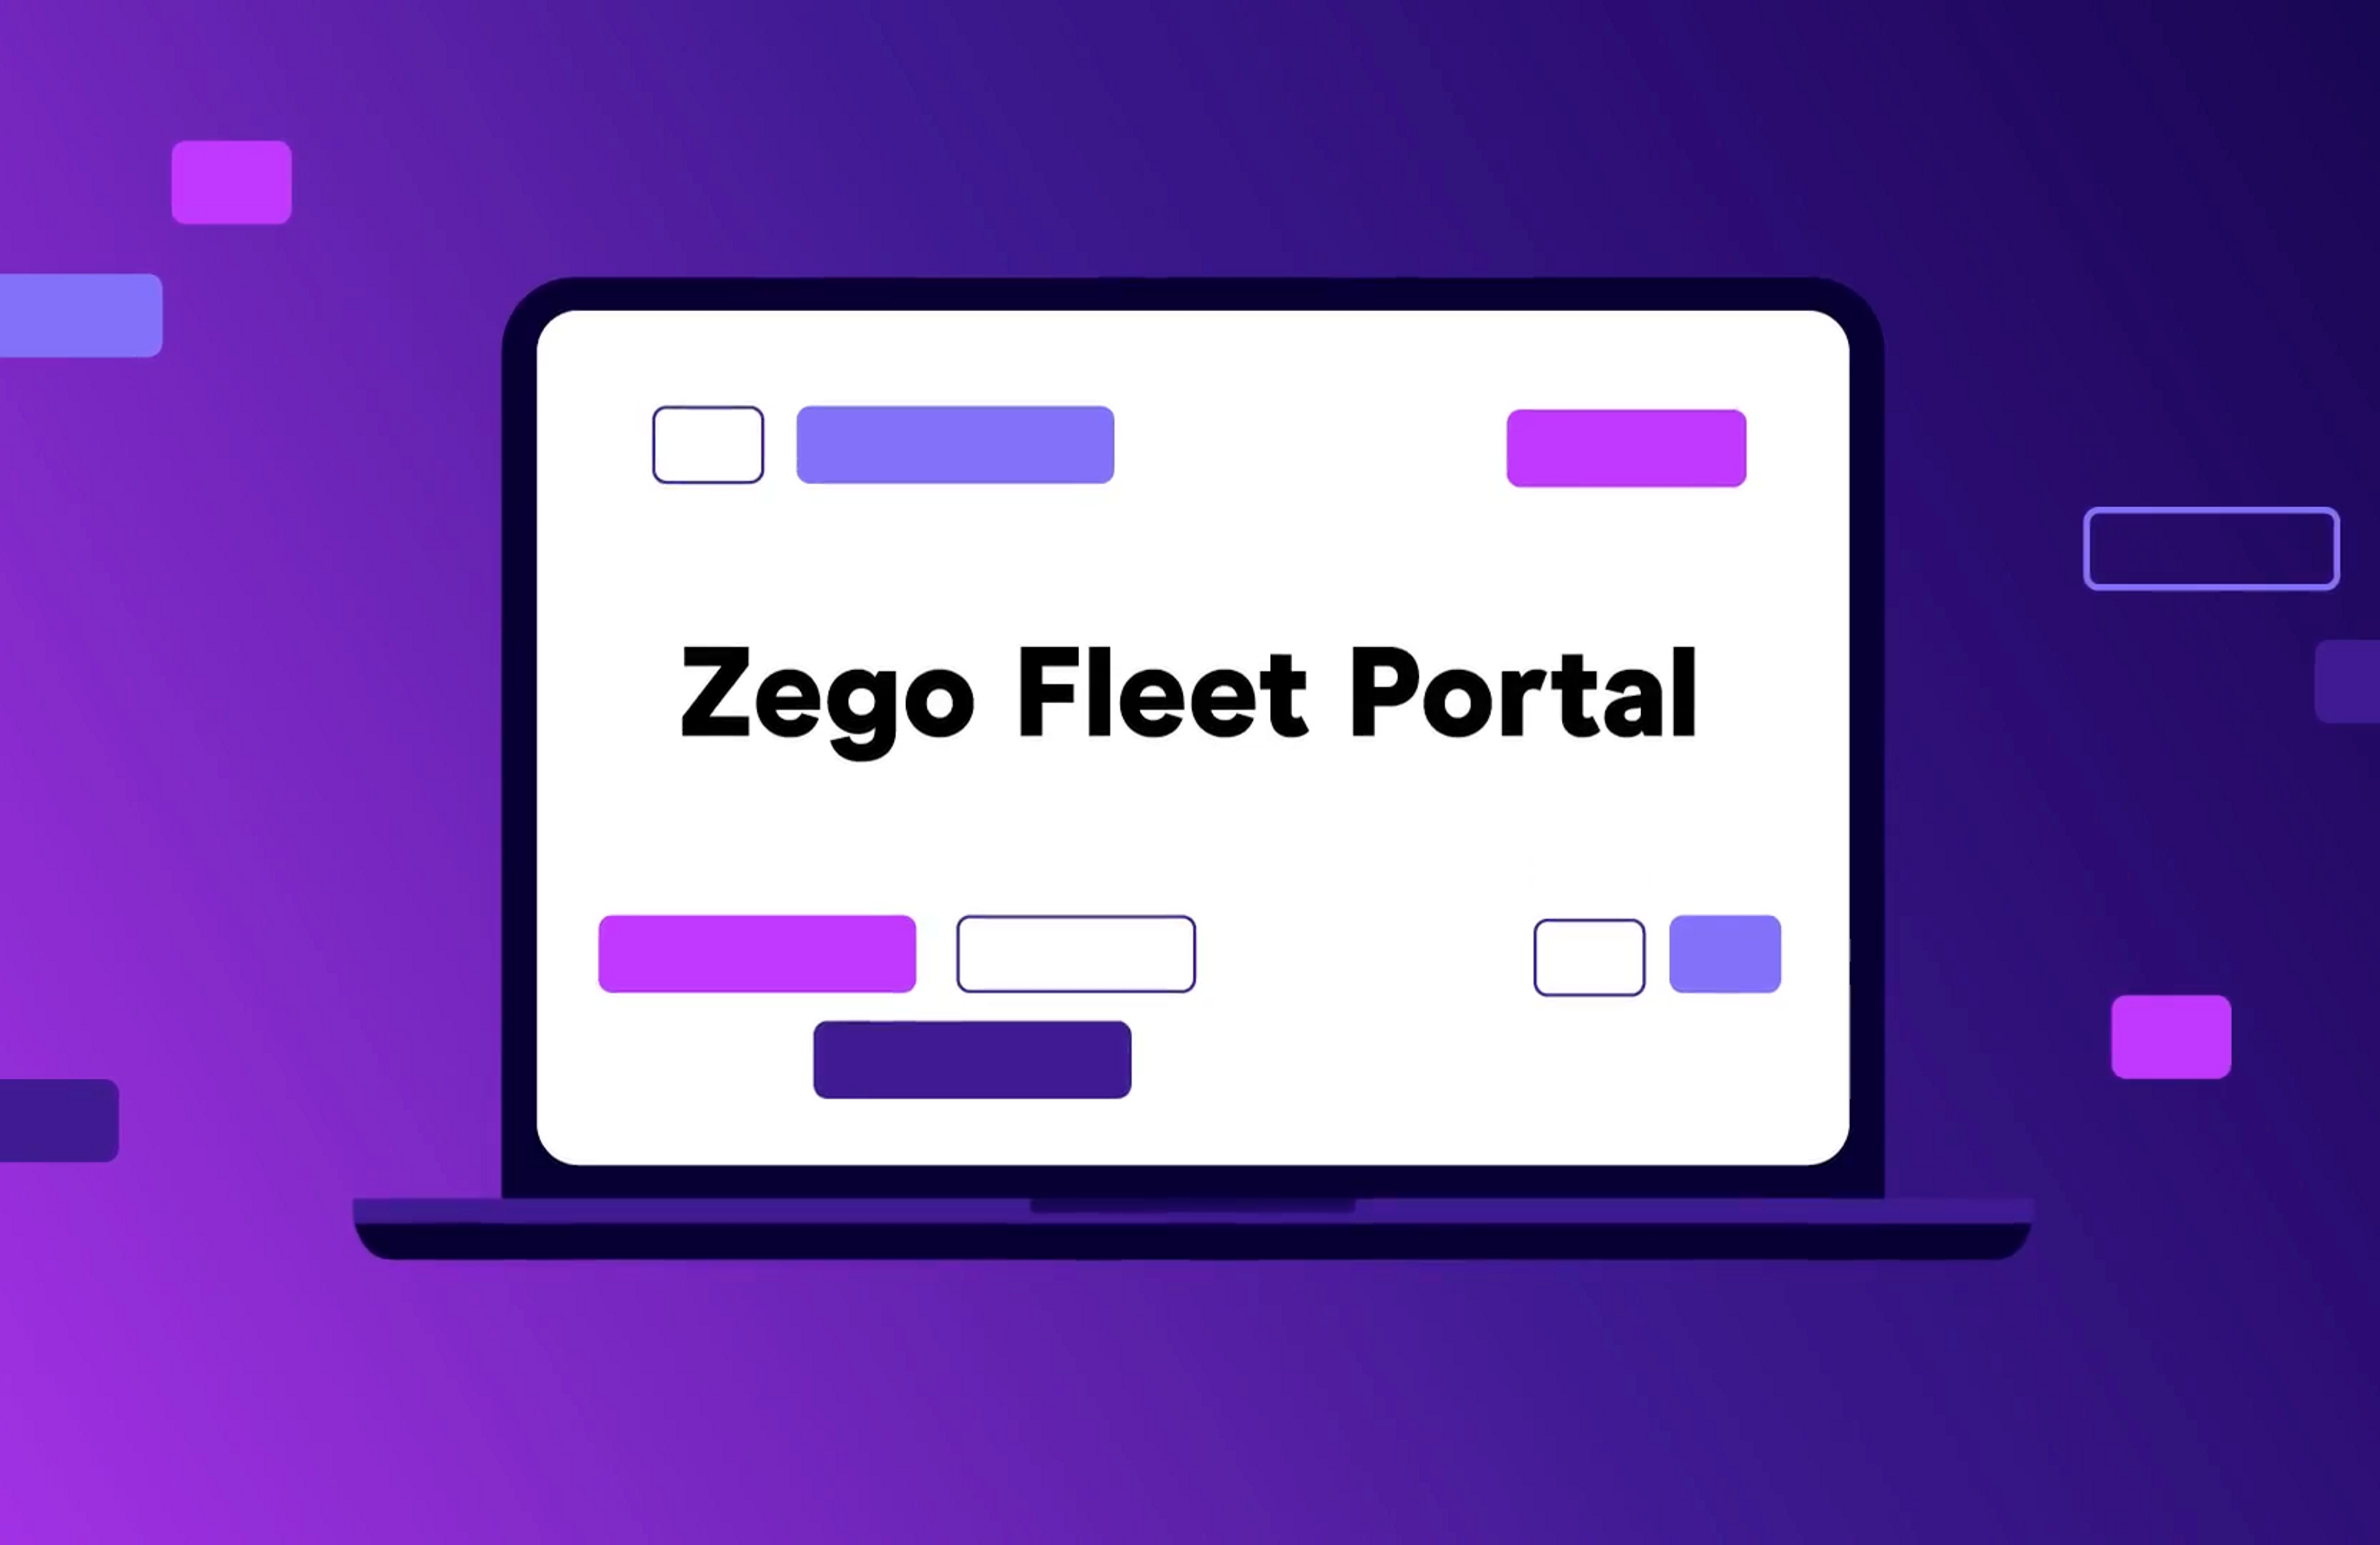 De Fleet Portal. In 1 minuut